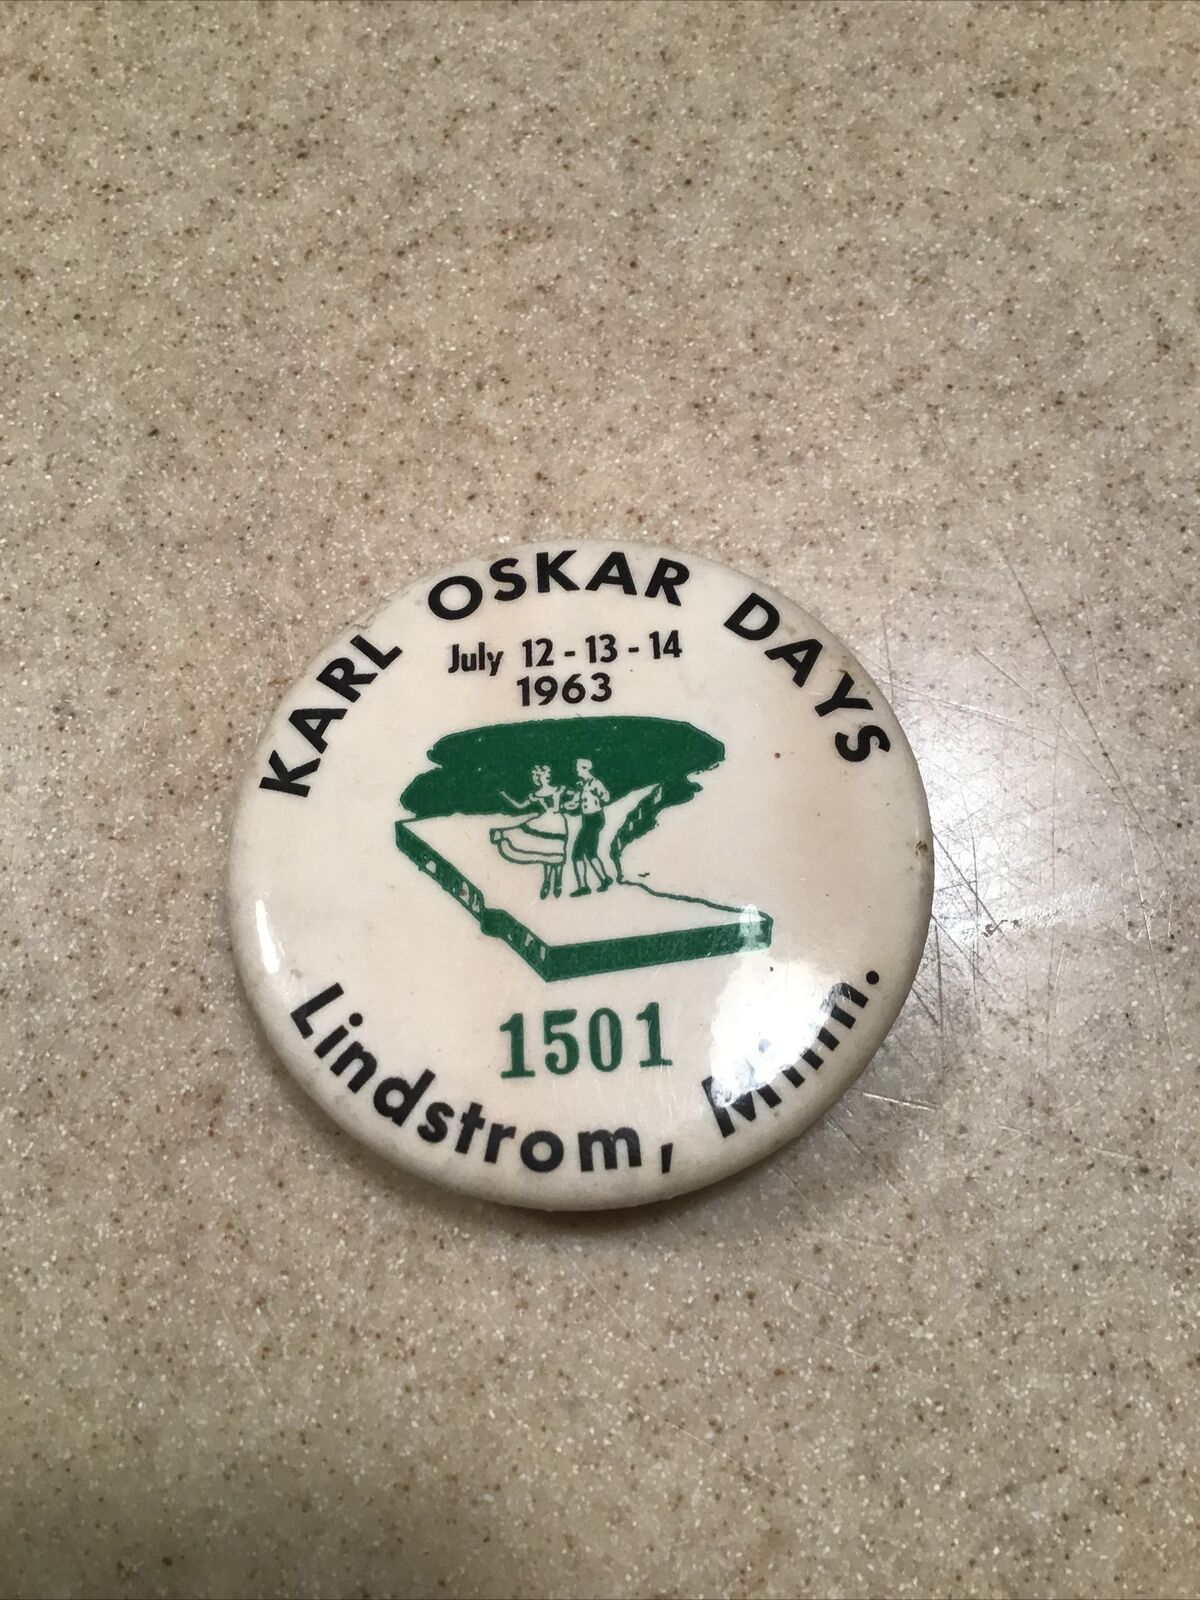 karl Oskar days vintage pinback button 1963